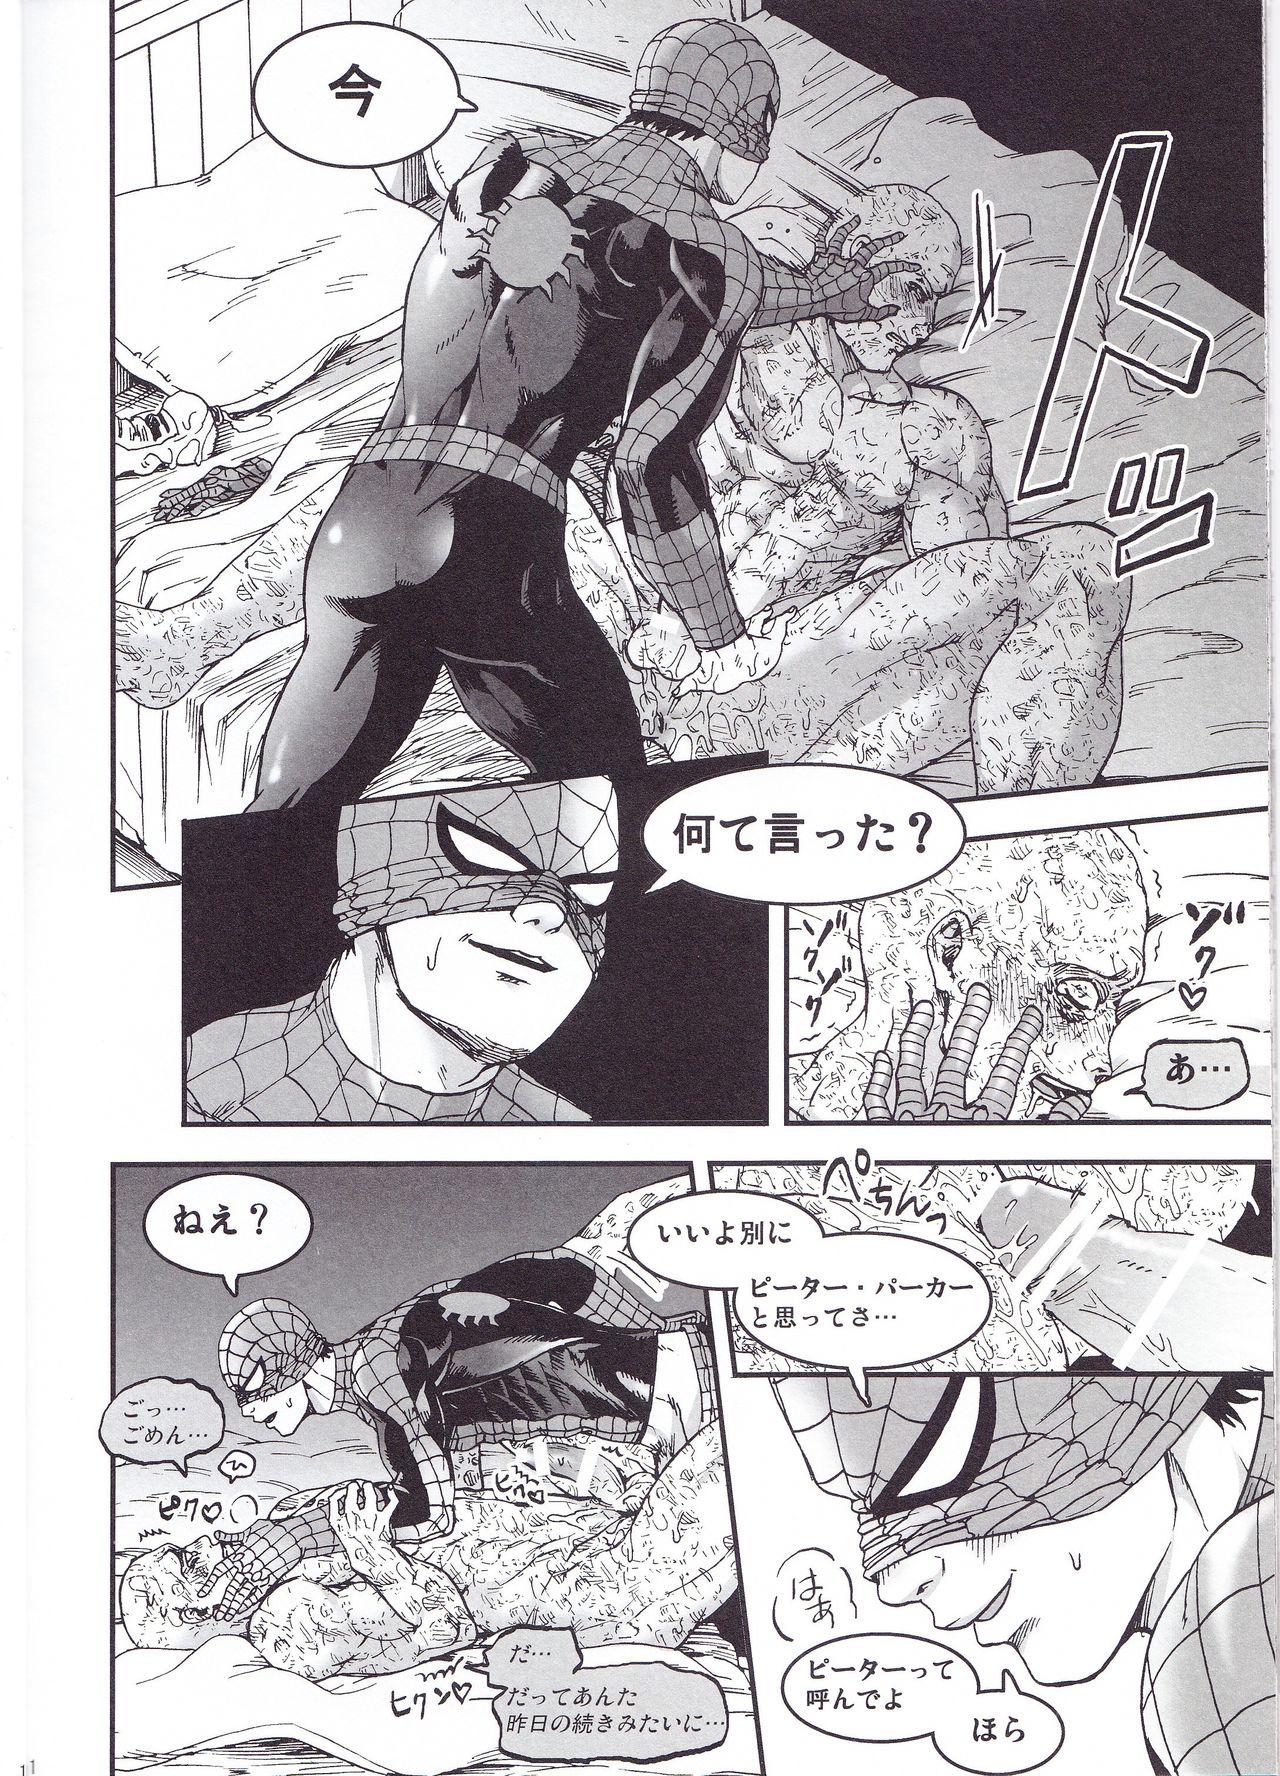 Shecock THREE DAYS 2-3 - Spider-man Deadpool Alt - Page 10